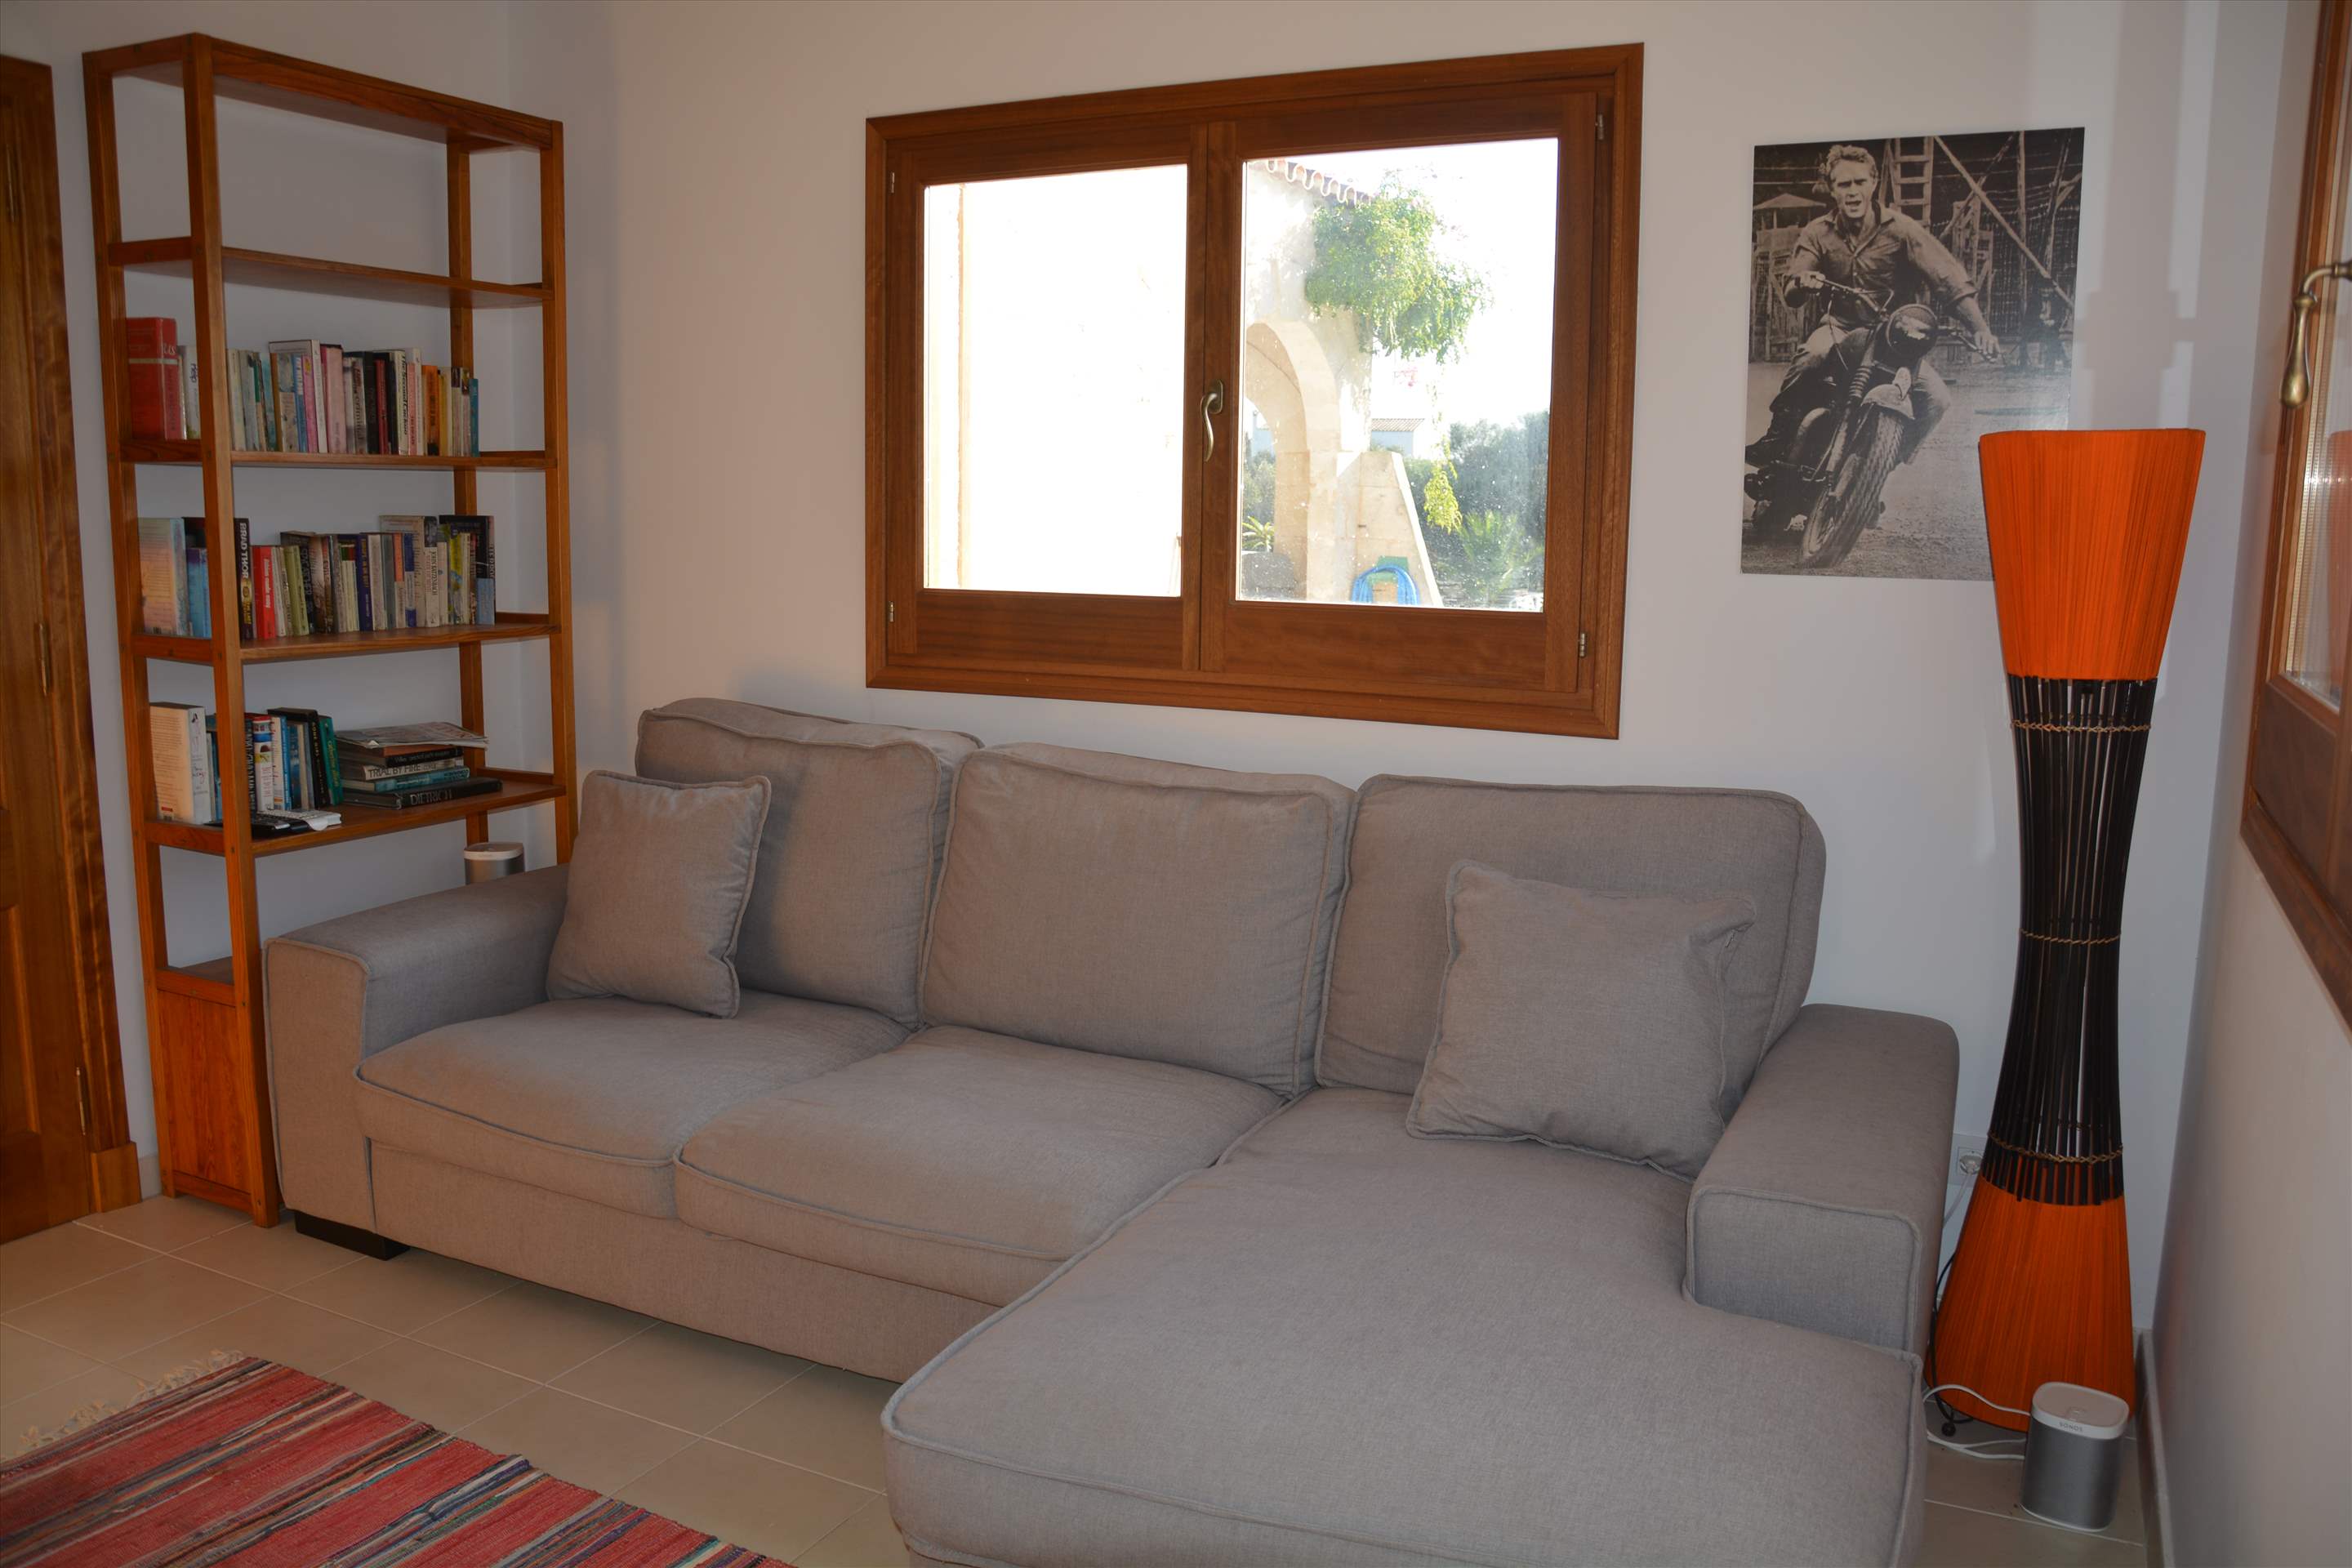 Les Arcs, 5 bedroom villa in Mahon, San Luis & South East, Menorca Photo #17